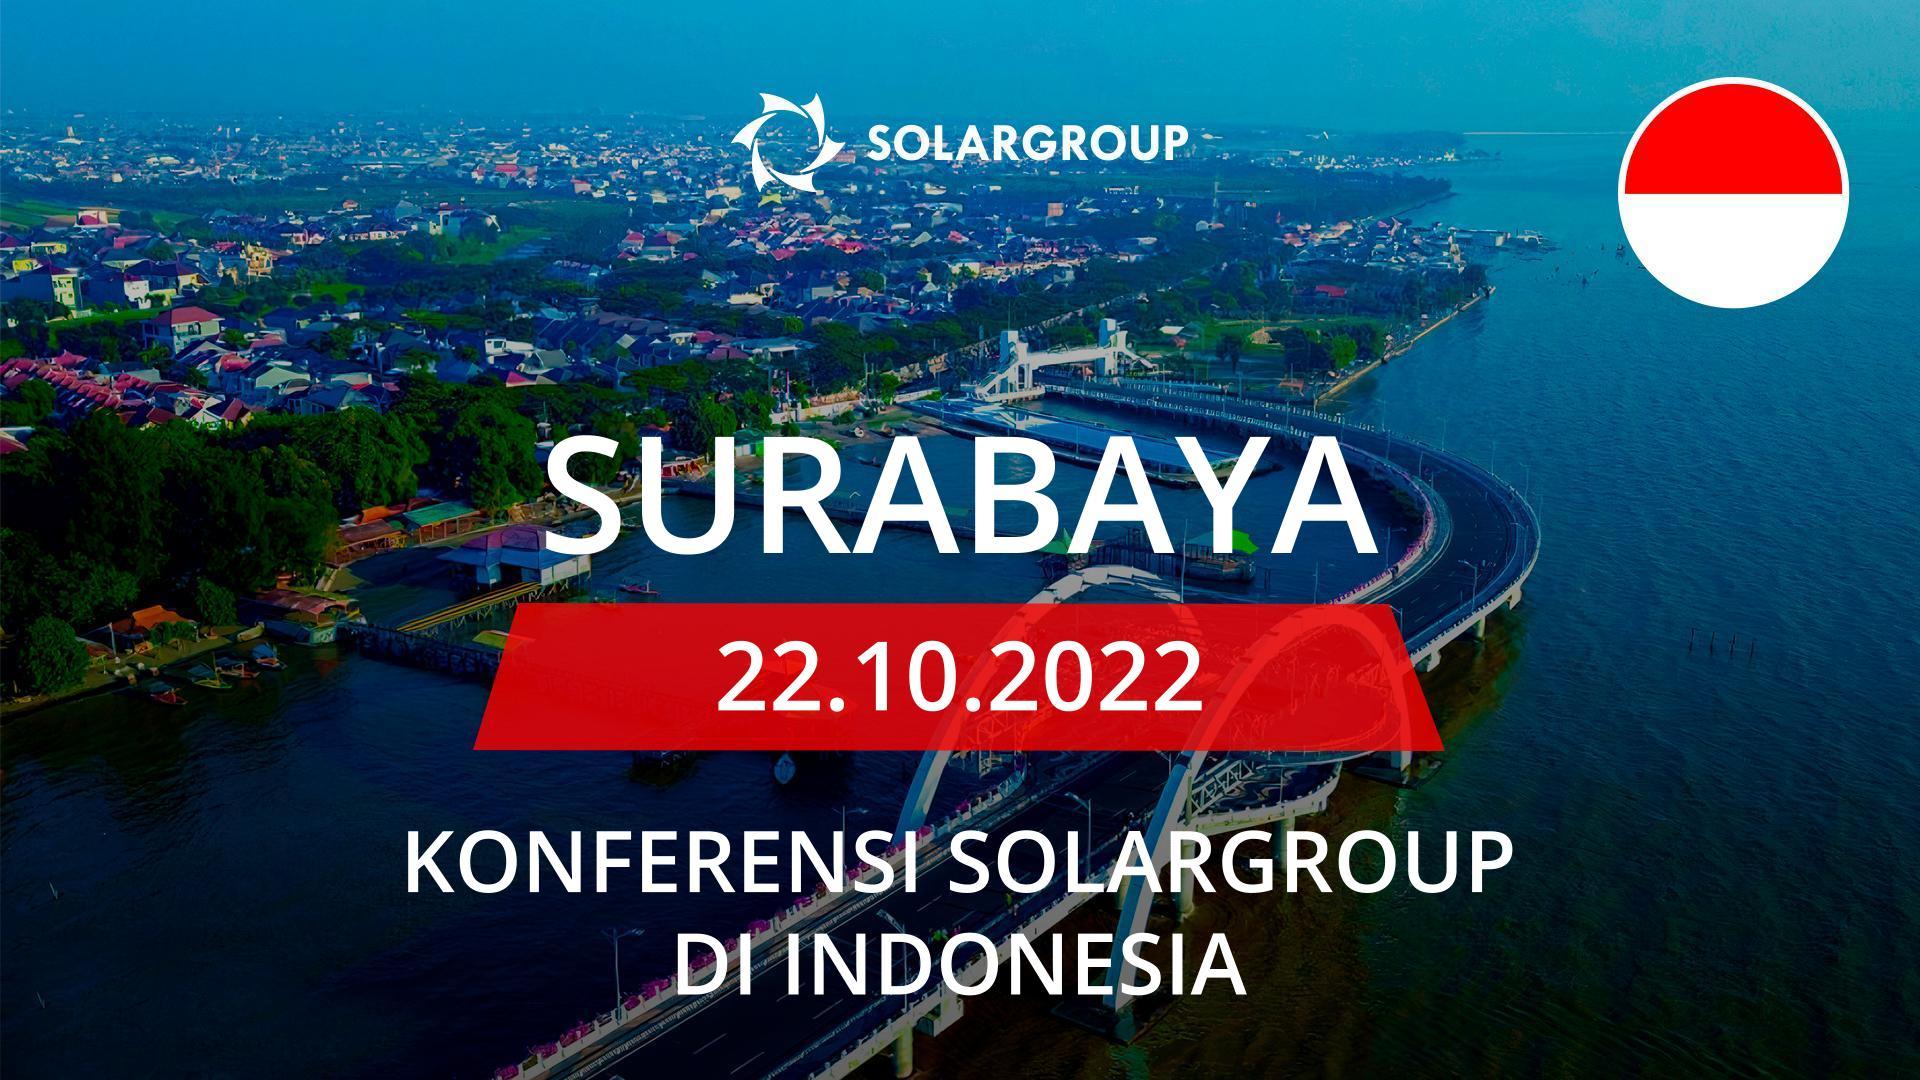 Konferensi SOLARGROUP di Indonesia: 22 Oktober, Surabaya